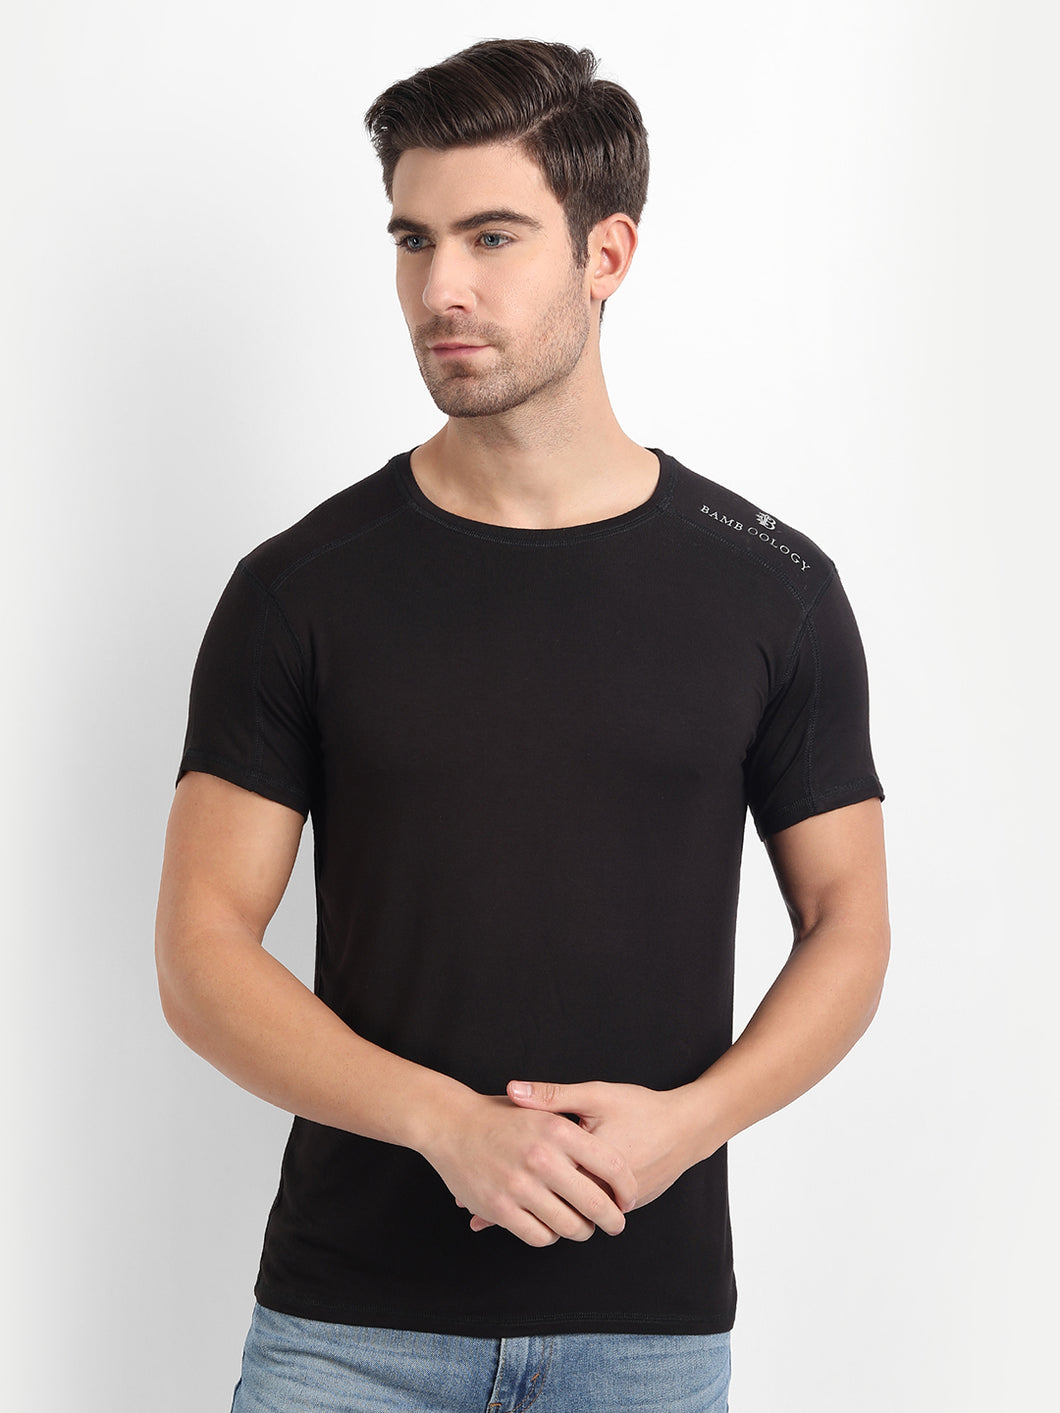 Bamboo Fabric Black T-shirt For Men